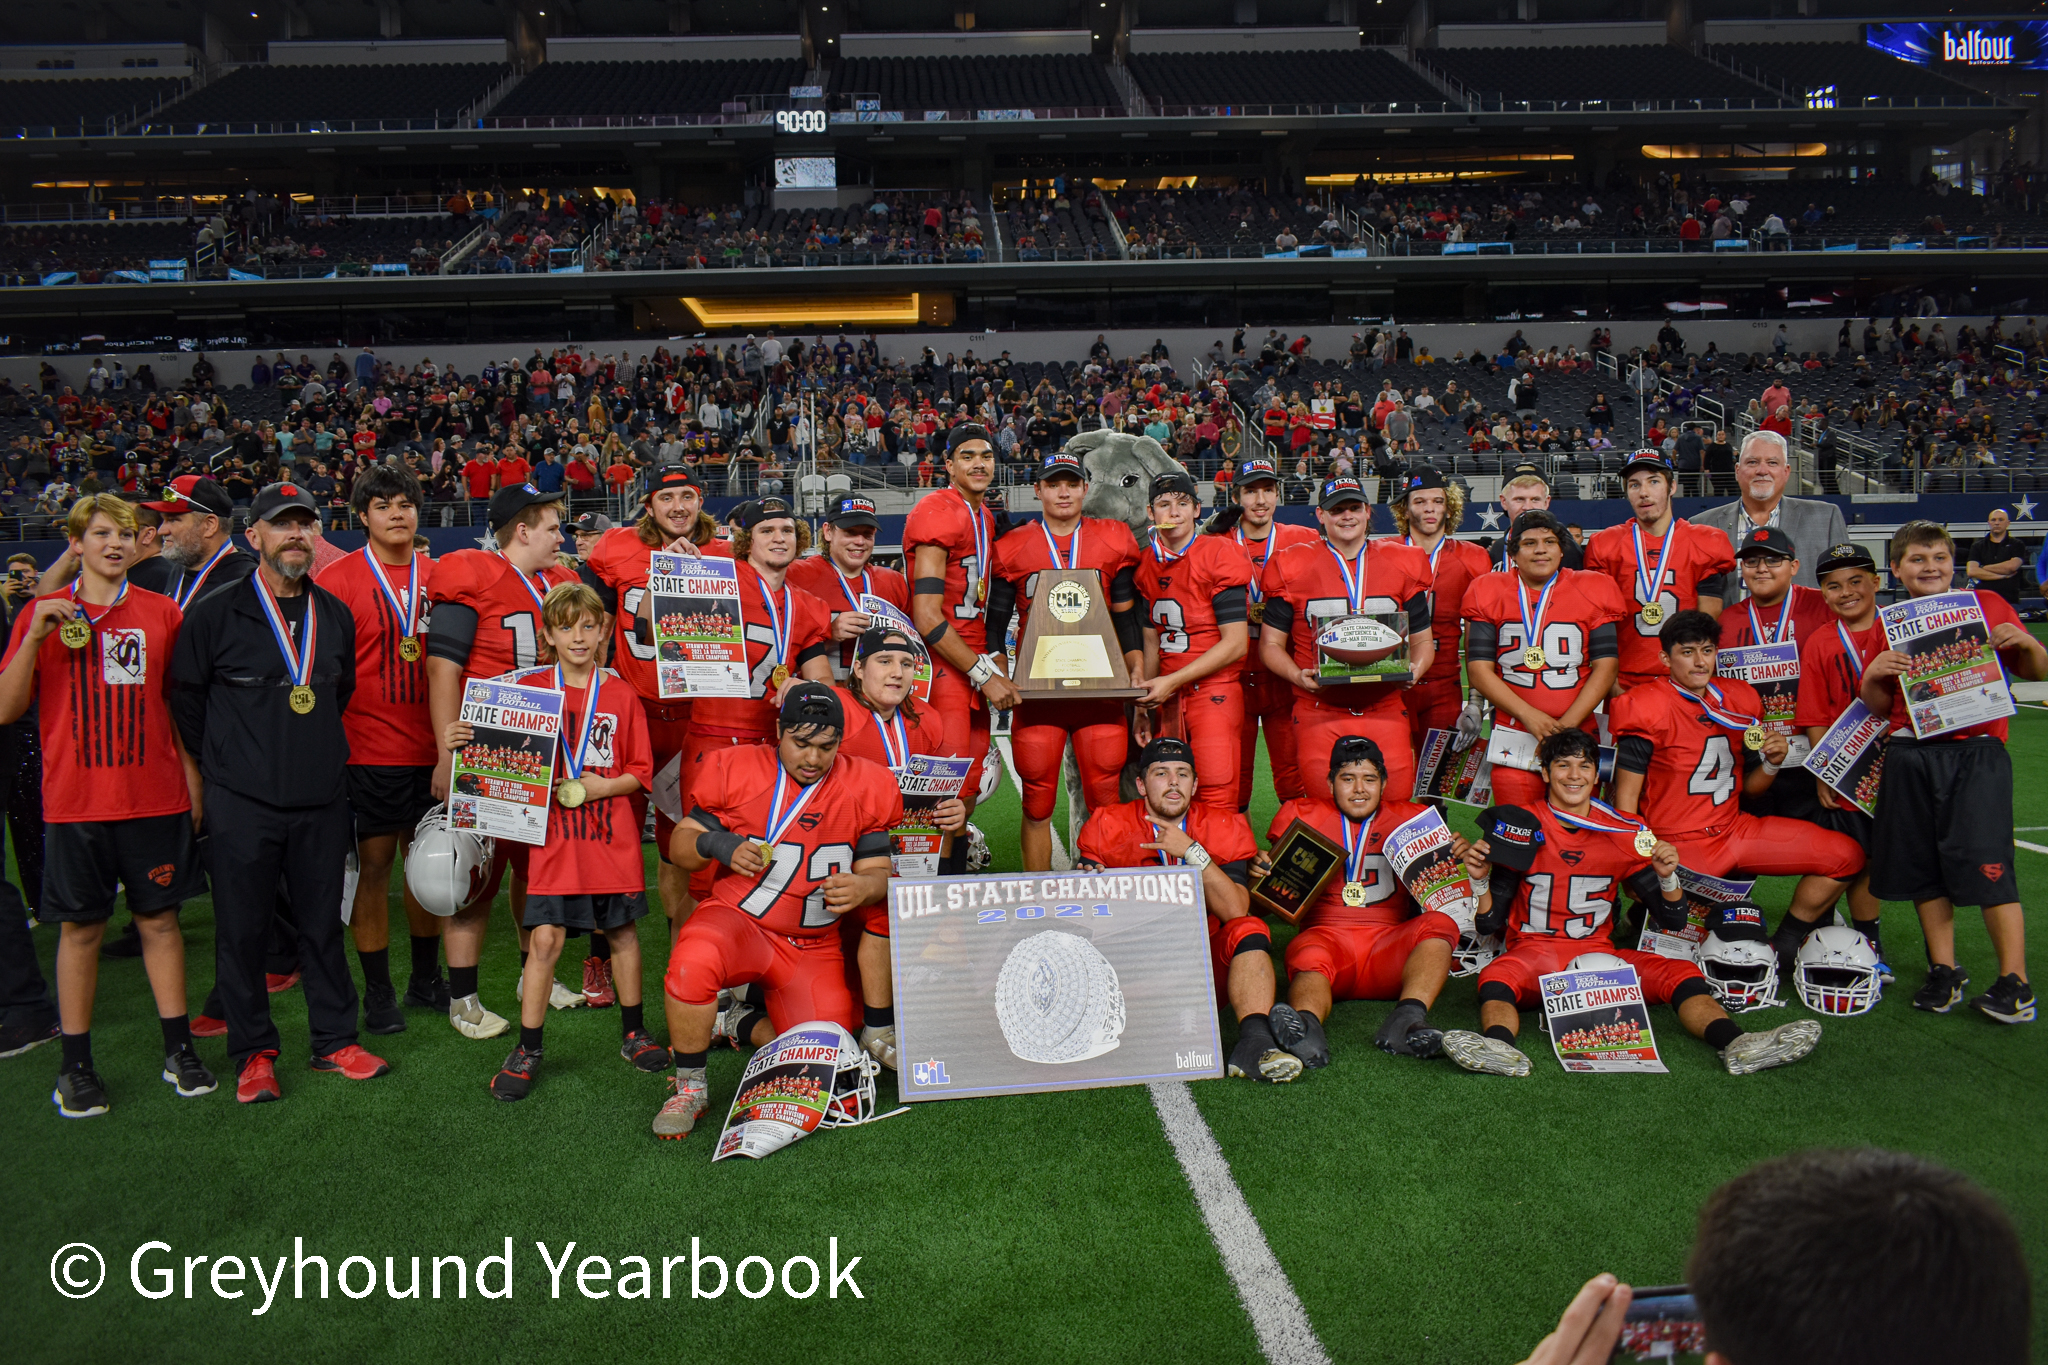 Greyhounds win State Football Championship!